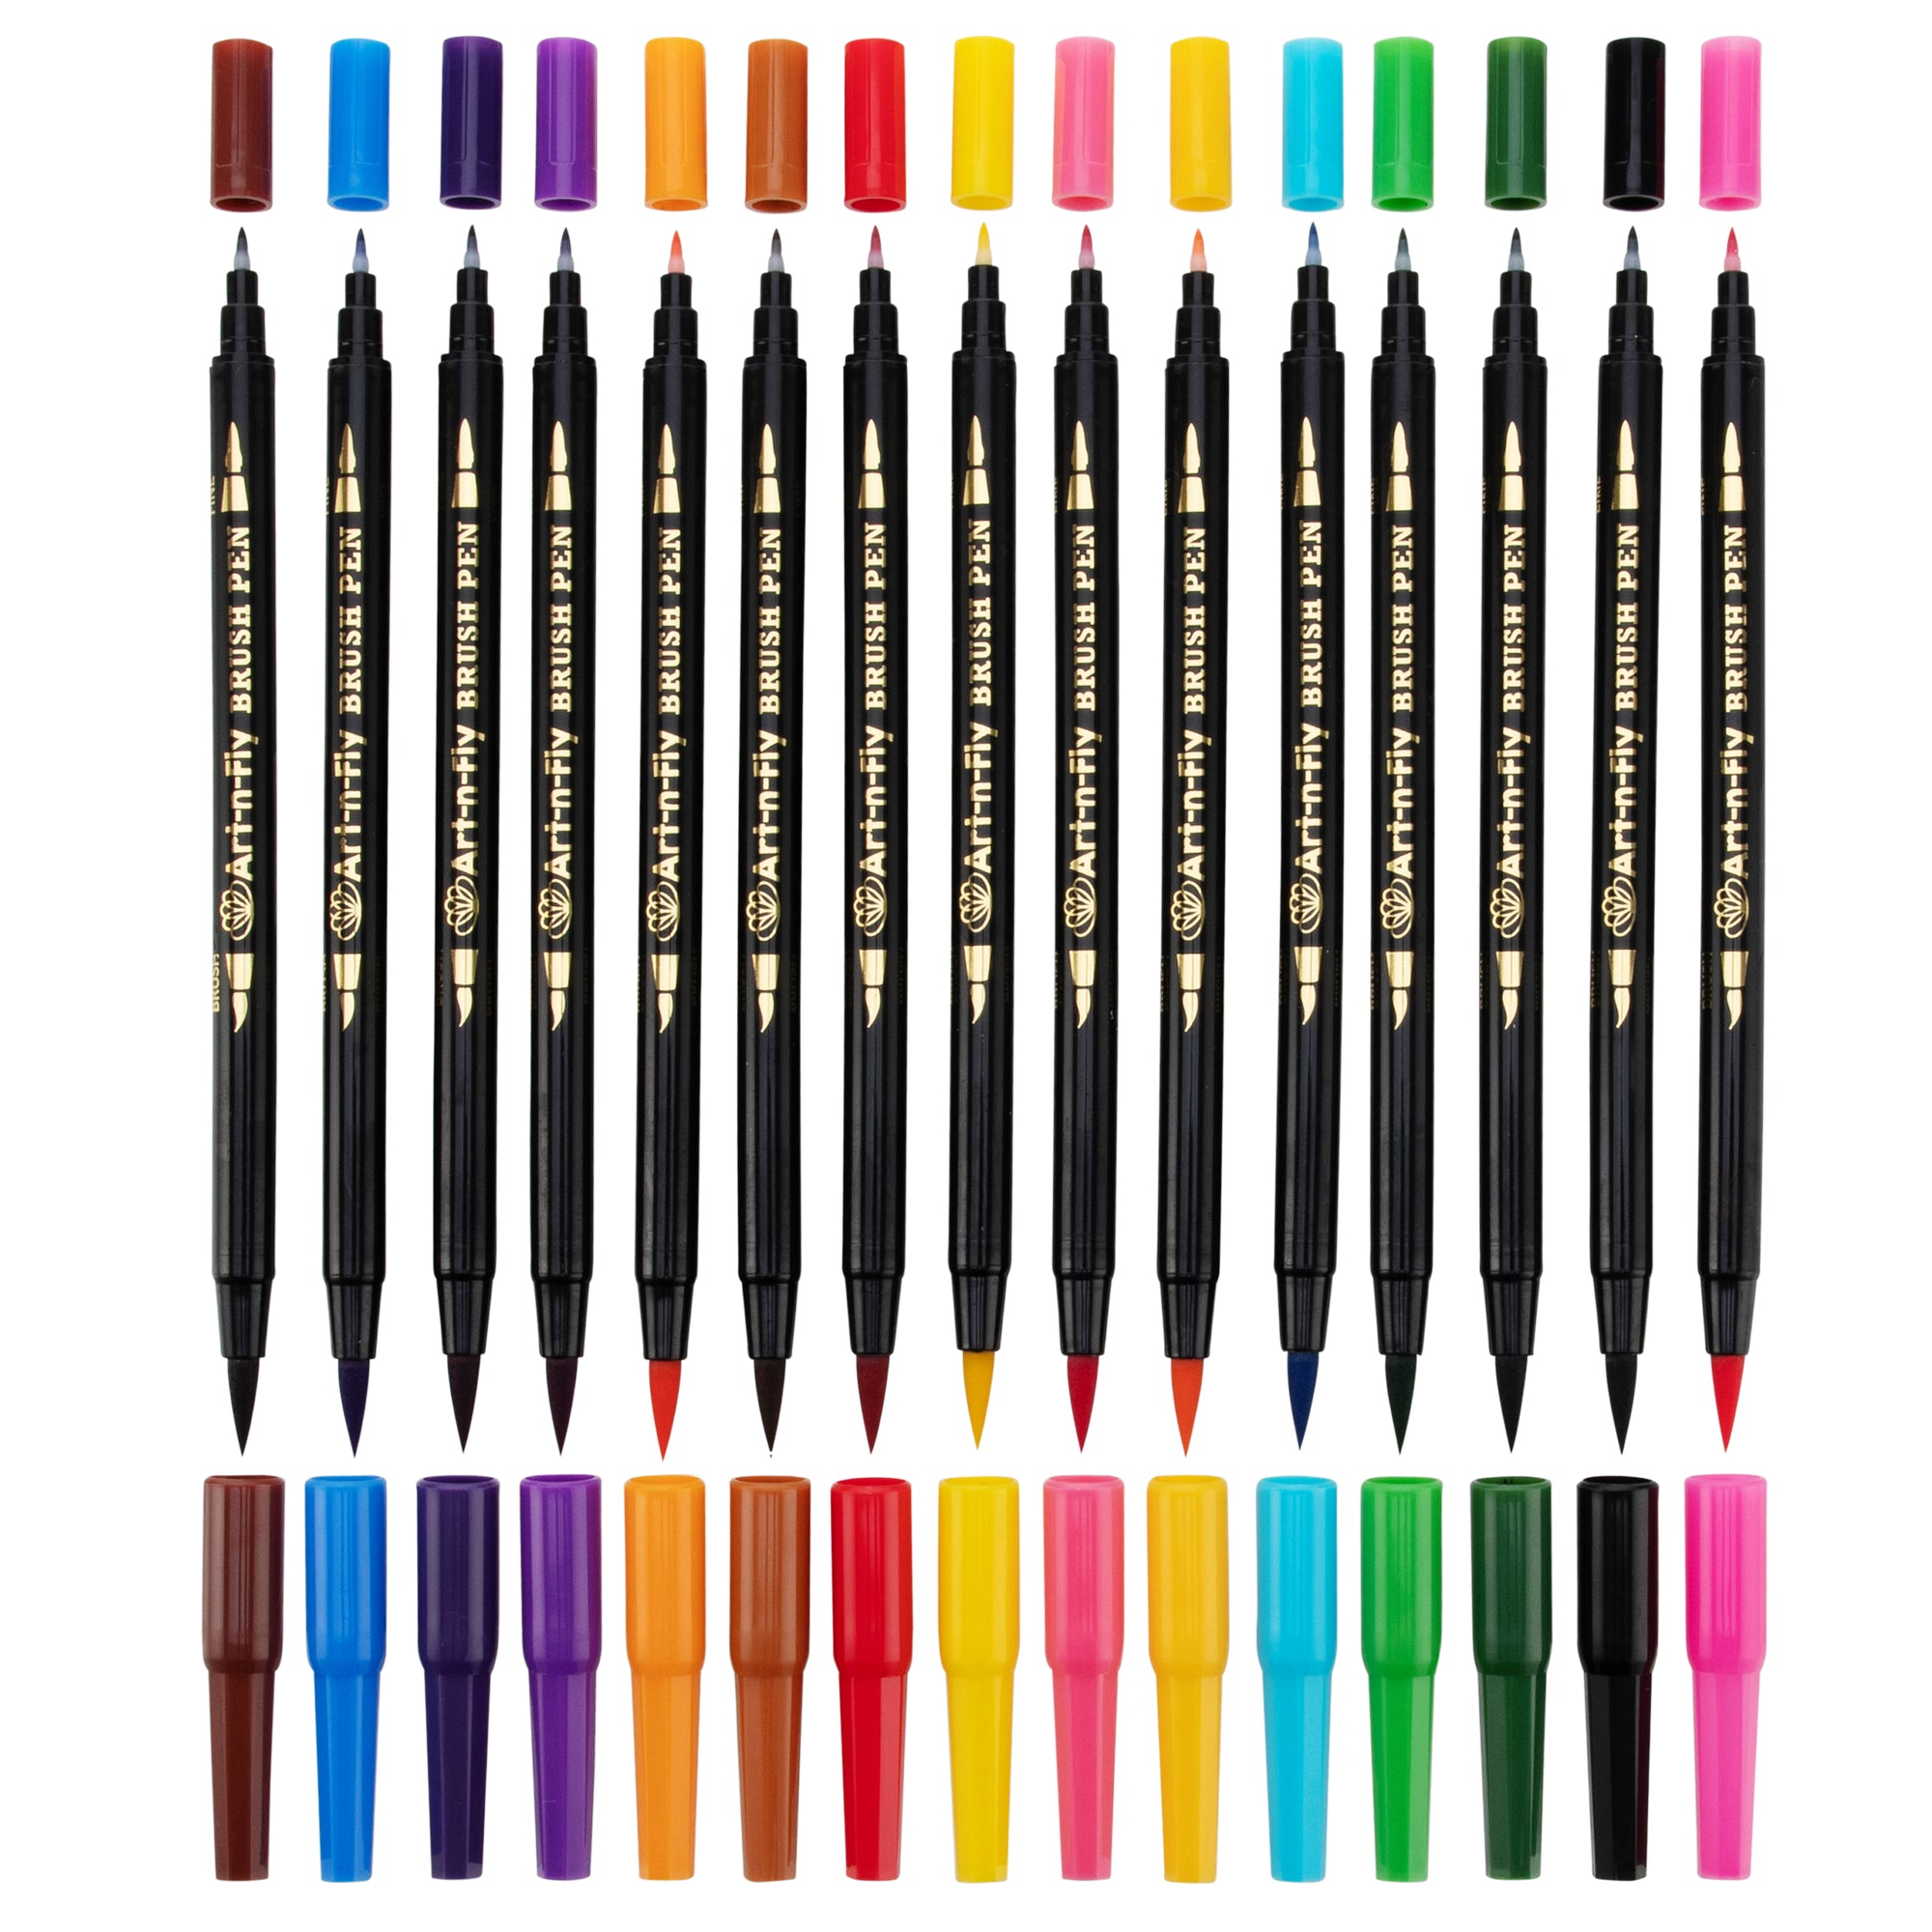 Vitoler Dual Tip Brush Markers Colored Pen,Fine Point Journal Pens &  Colored Brush Markers for Kid Adult Coloring Drawing Planner Calendar Art